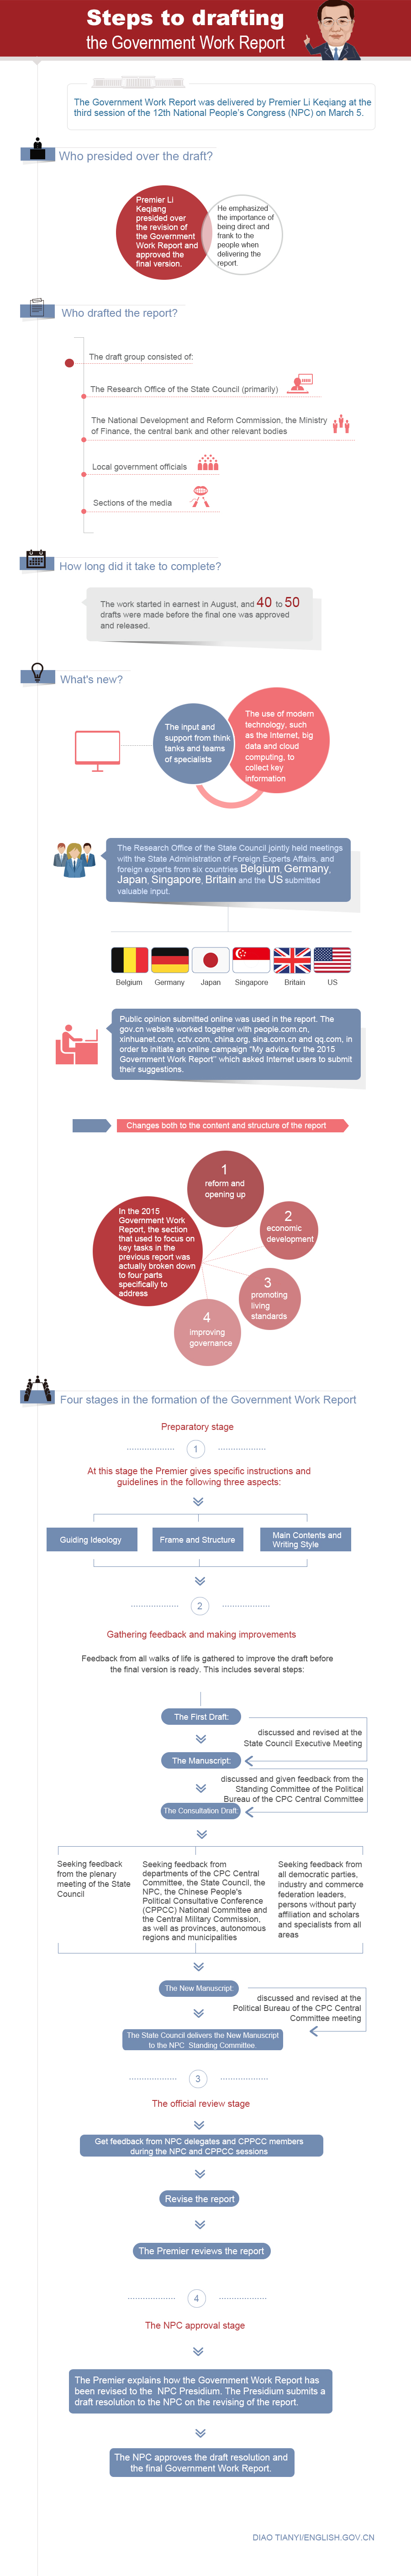 Govt Work Report drafting process